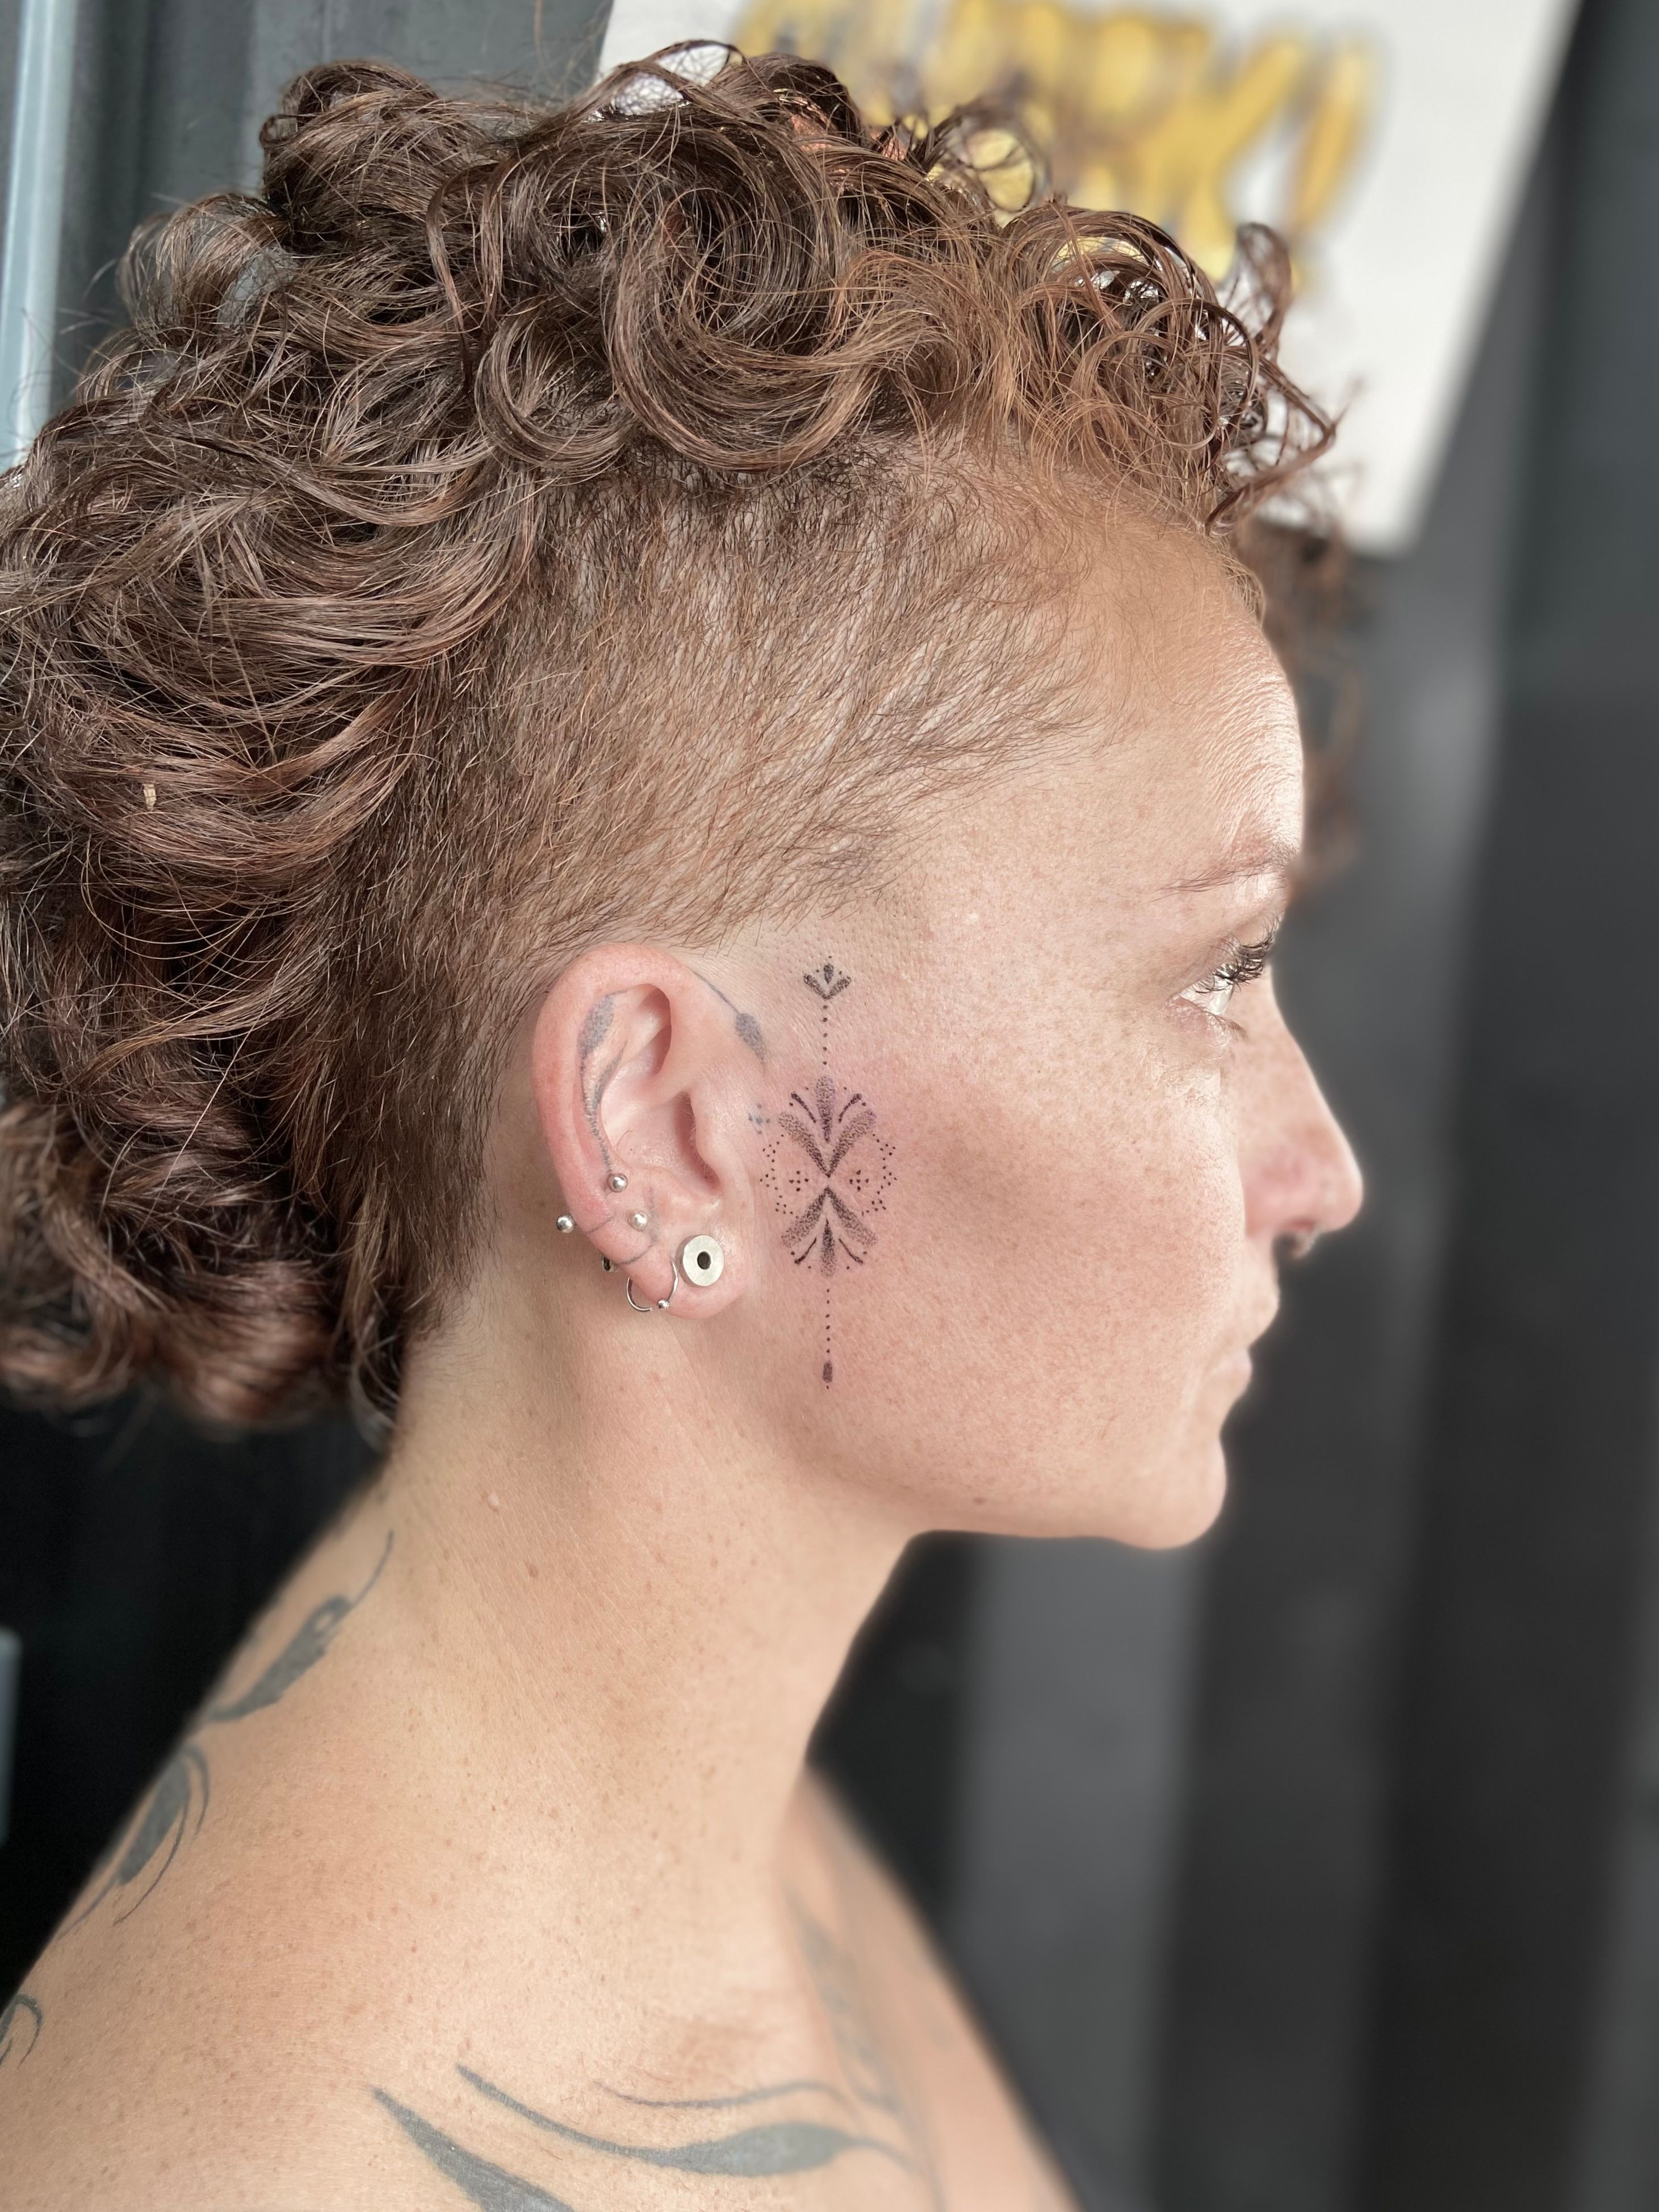 Face Tattoo Ideas  Designs for Face Tattoos